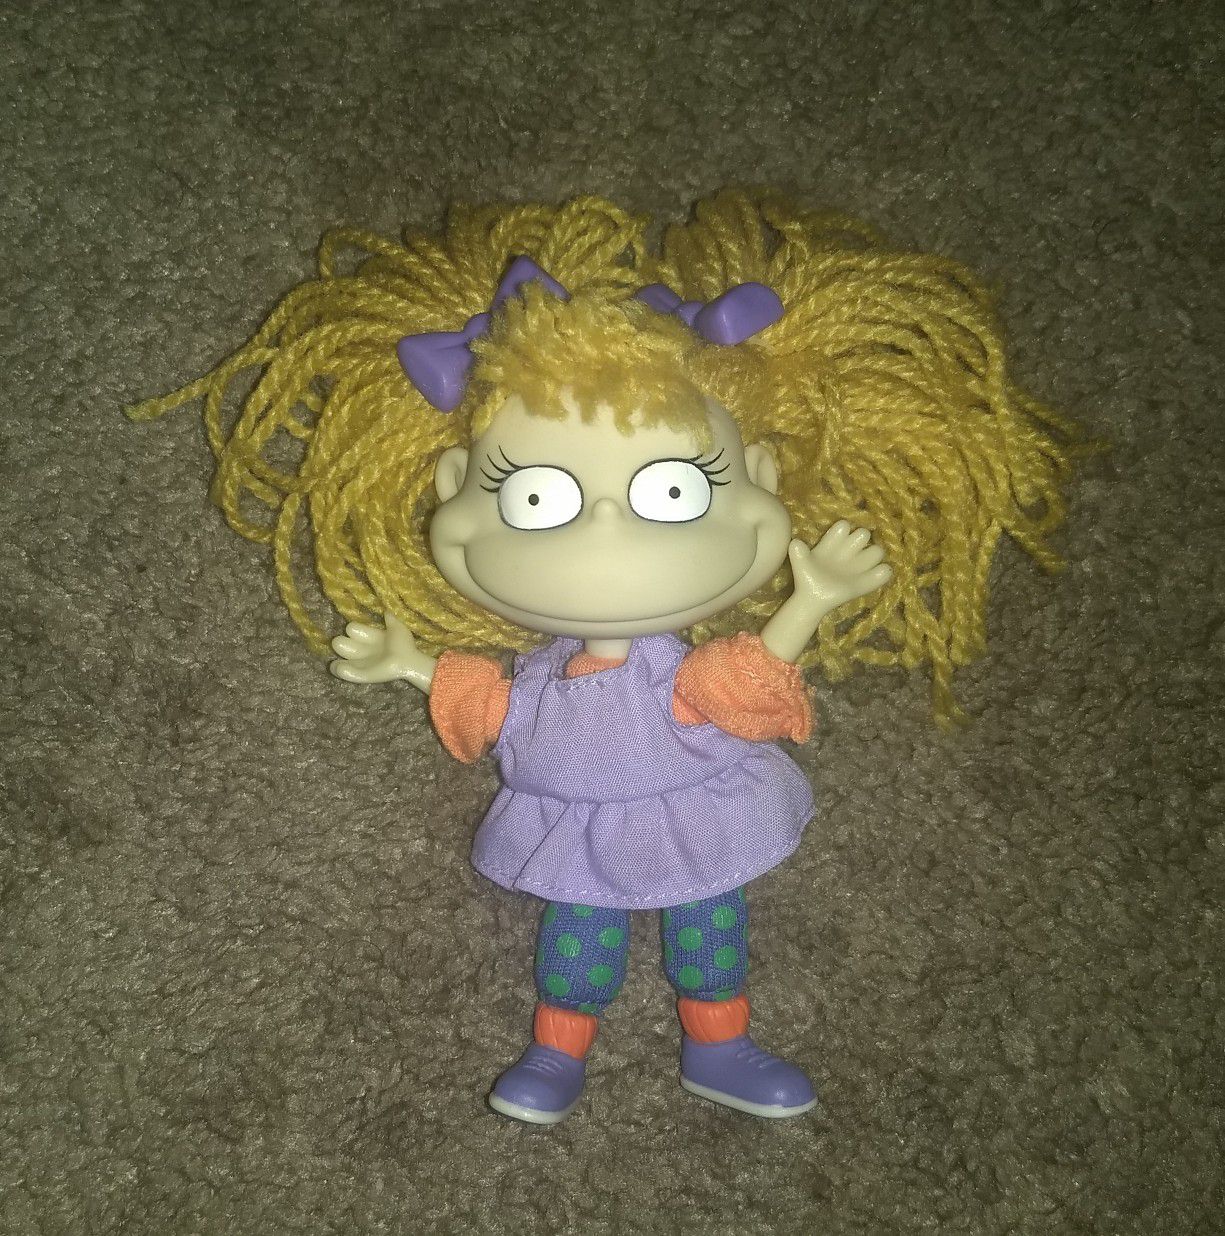 1997 Angelica 4.5" Mattel PVC Plush Action Figure Yarn Doll Rugrats Nickelodeon